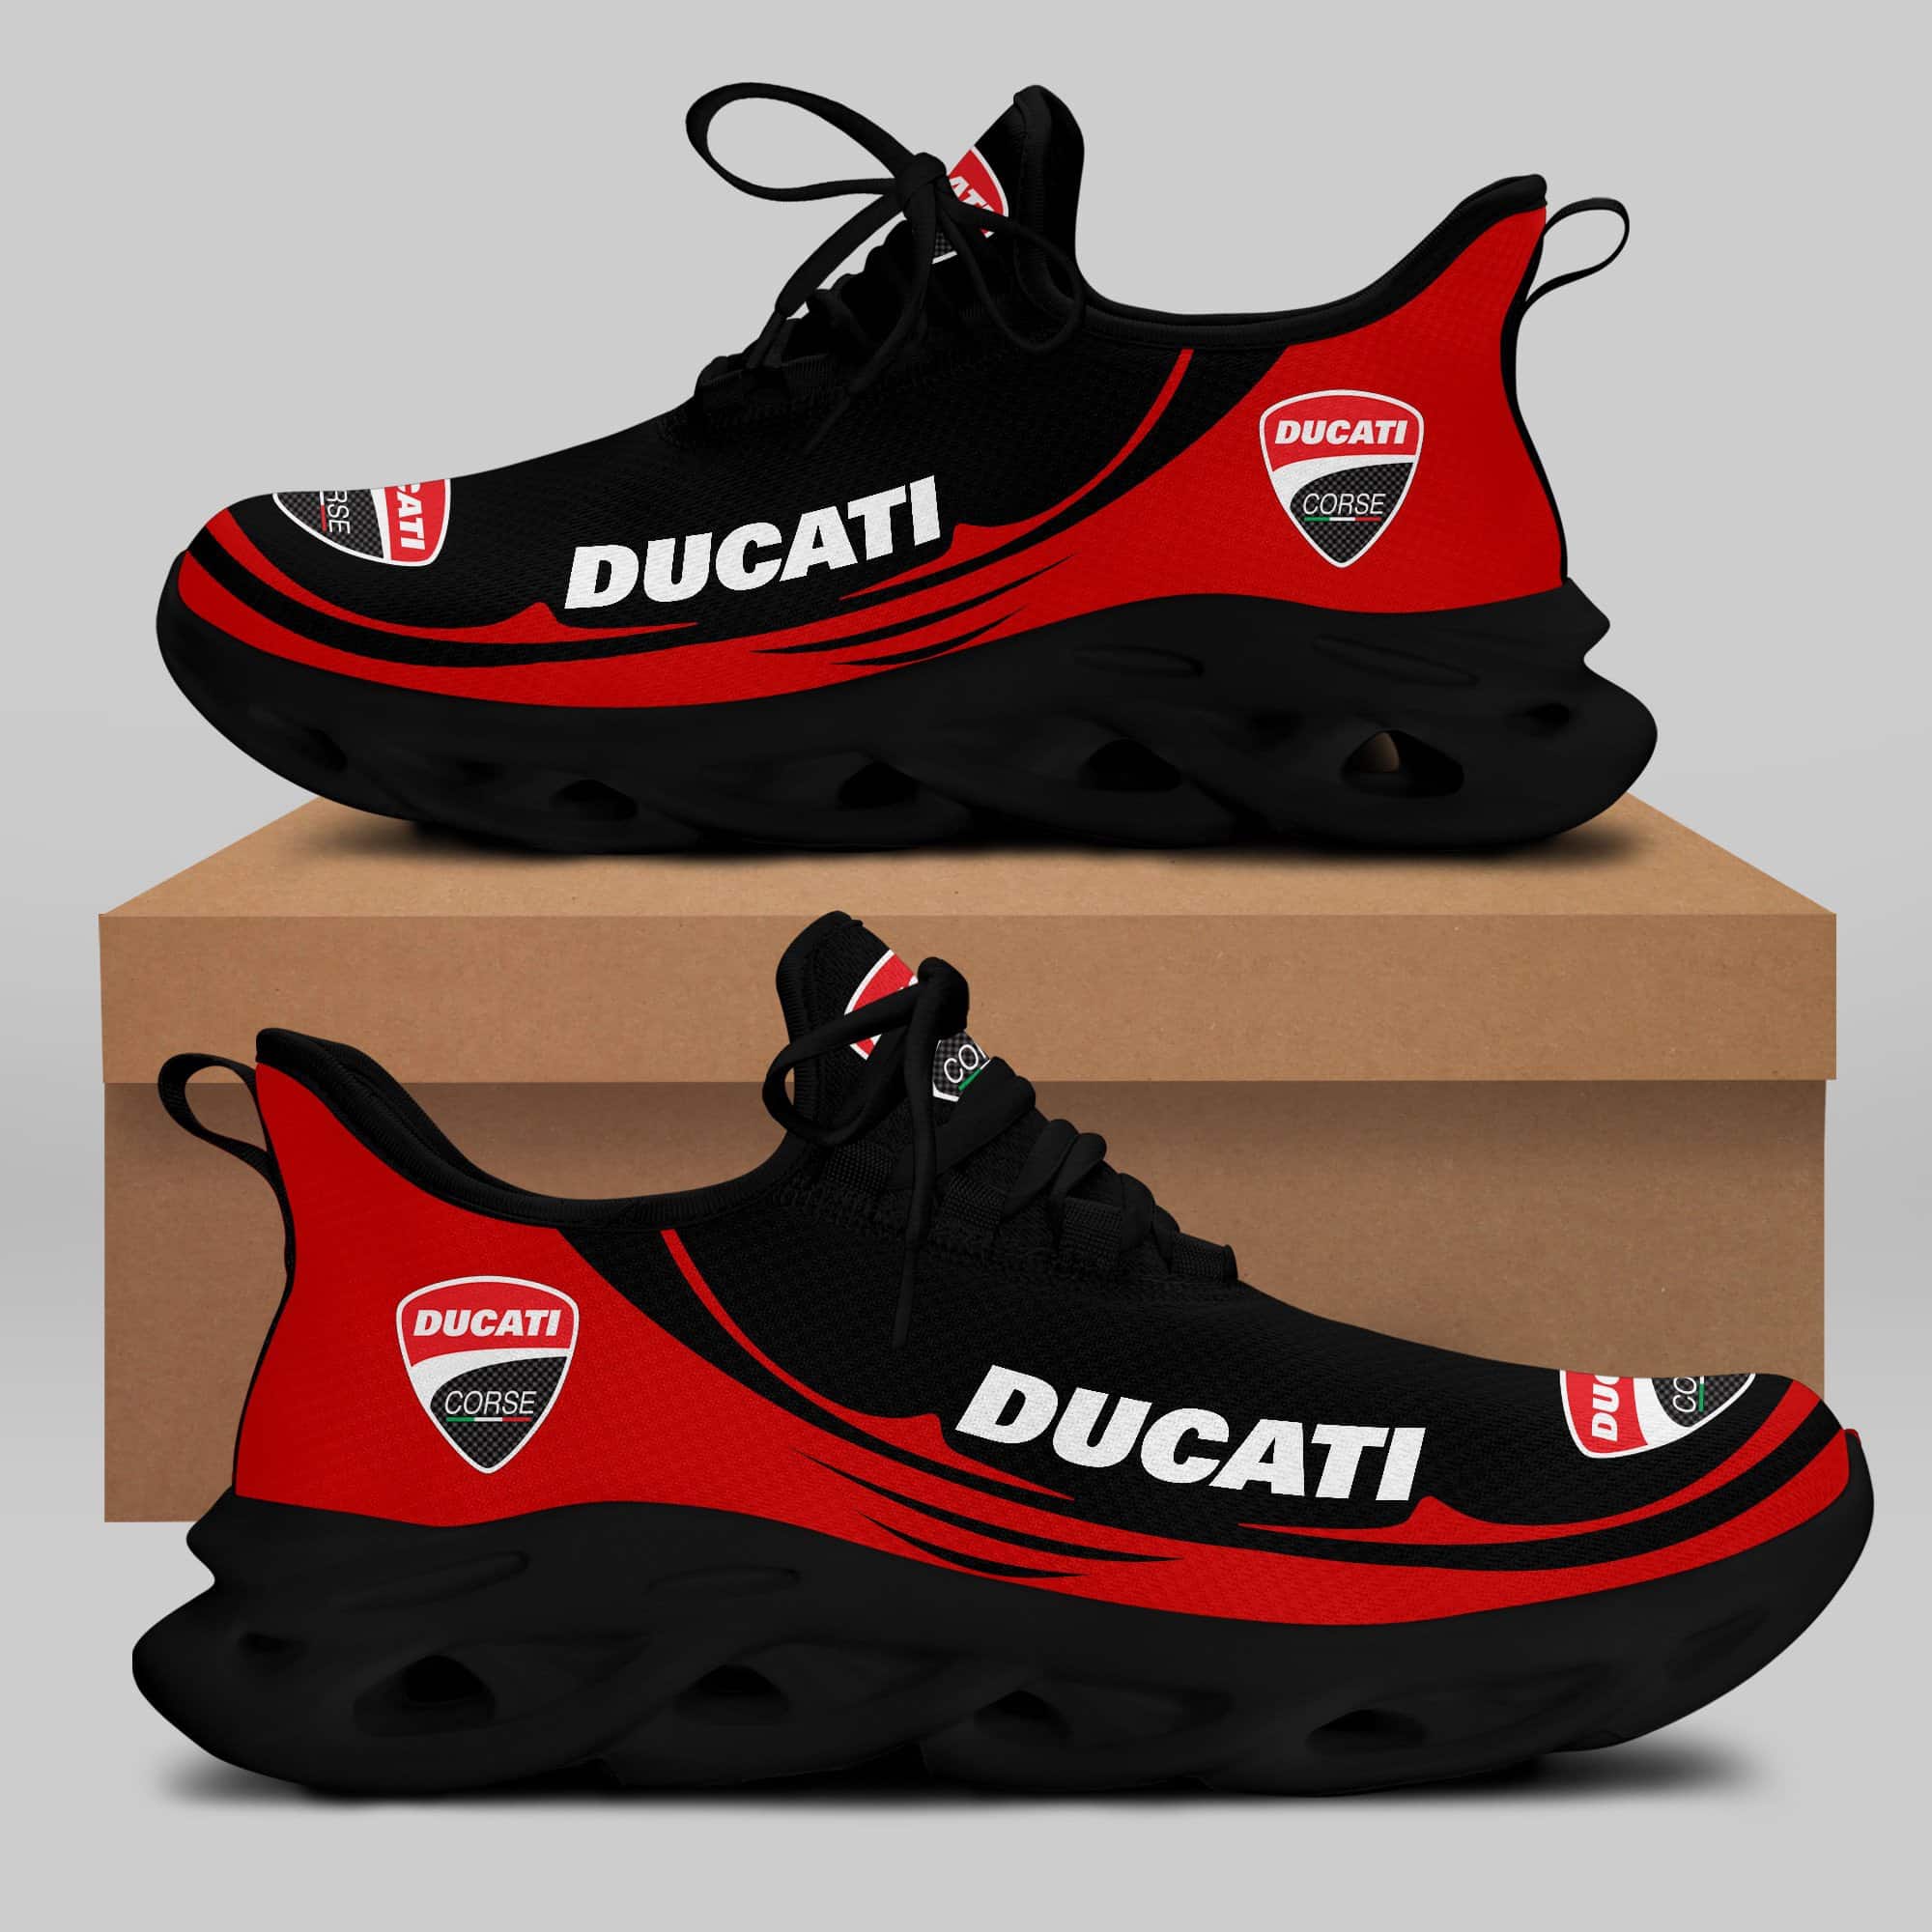 Ducati Racing Running Shoes Max Soul Shoes Sneakers Ver 42 1